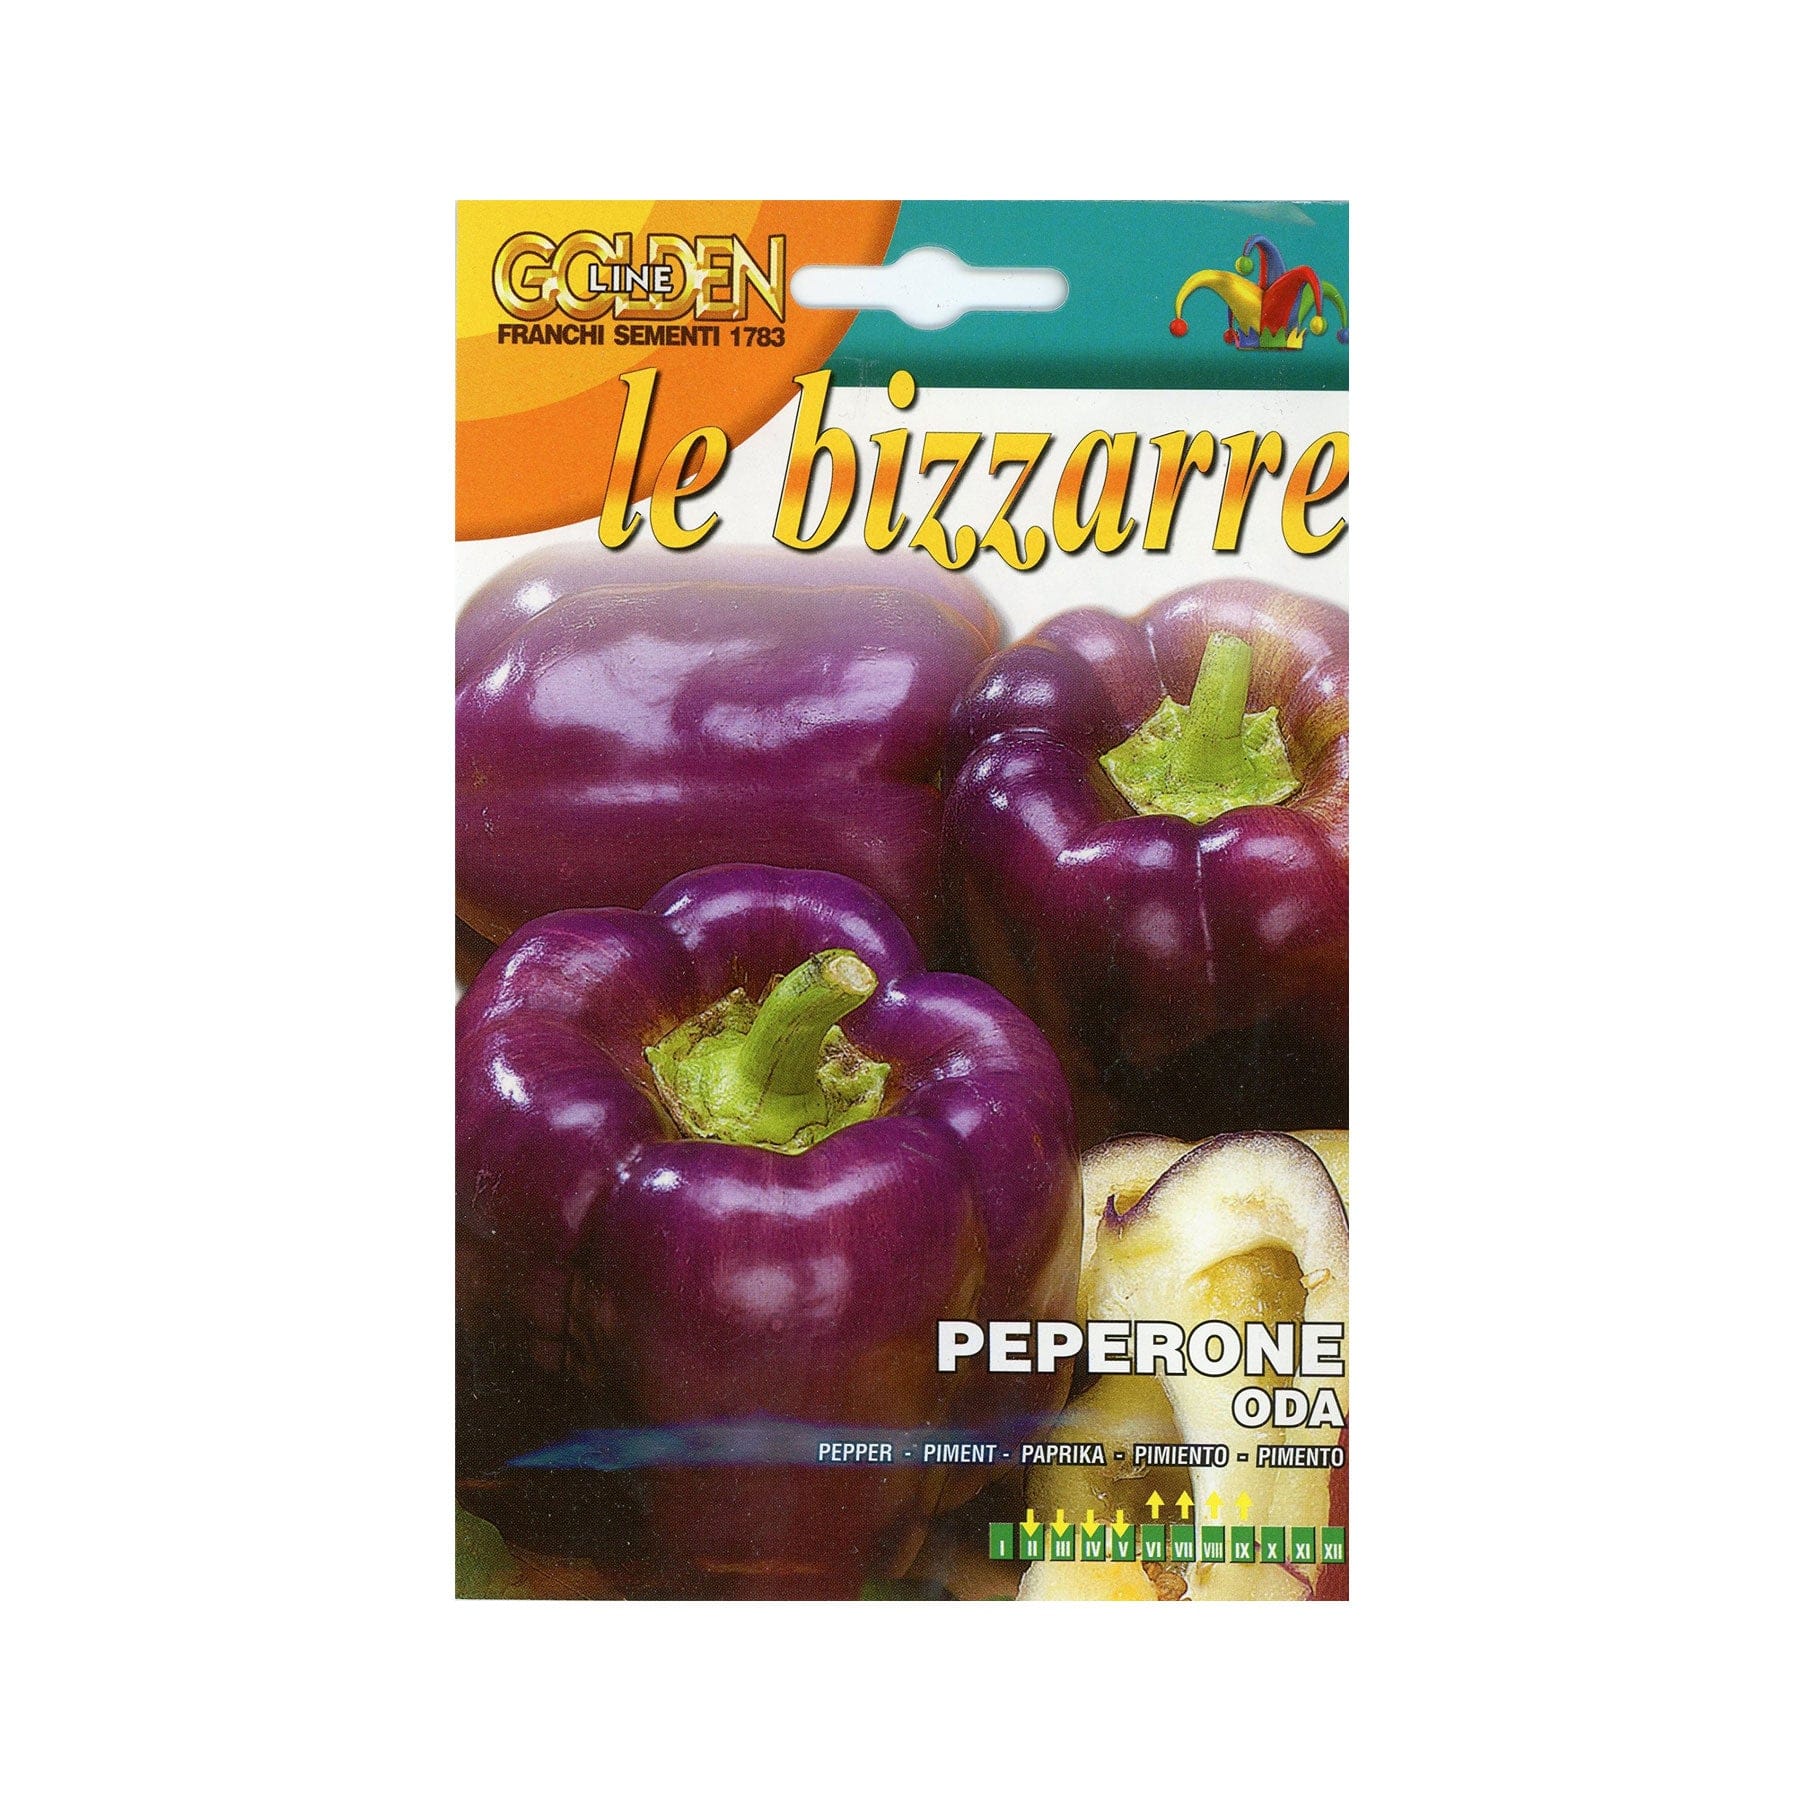 Purple pepper oda